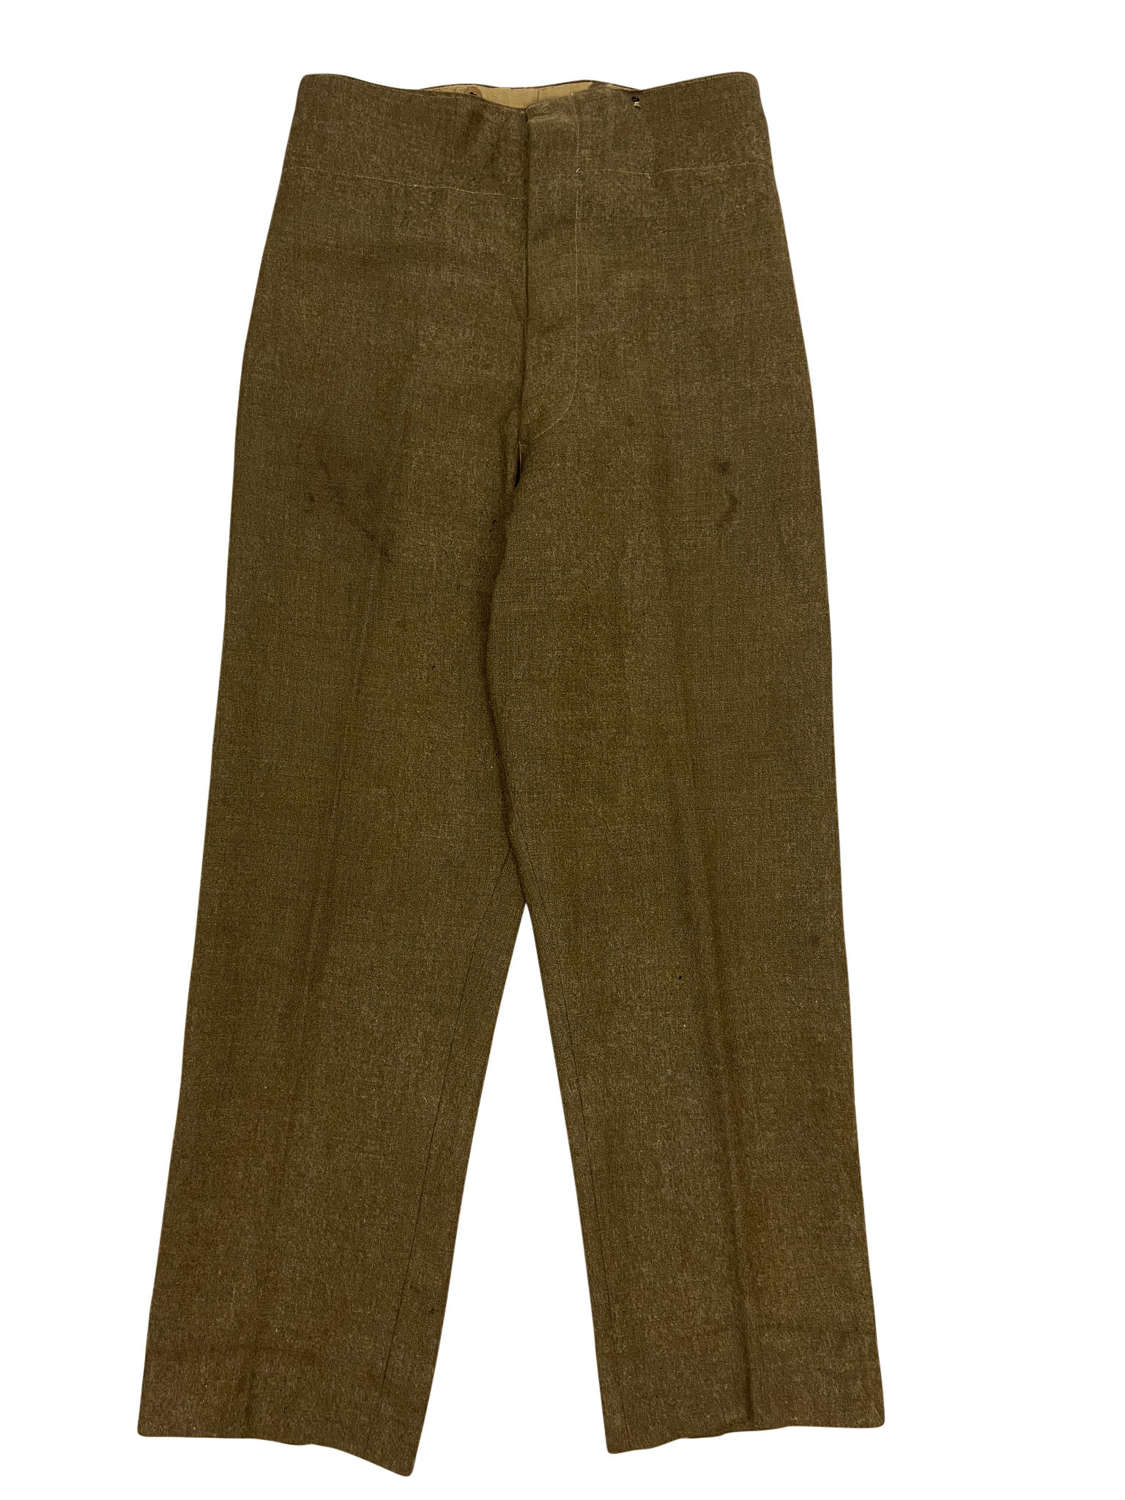 Original 1943 Dated 1940 Pattern (Austerity) Batteldress Trousers